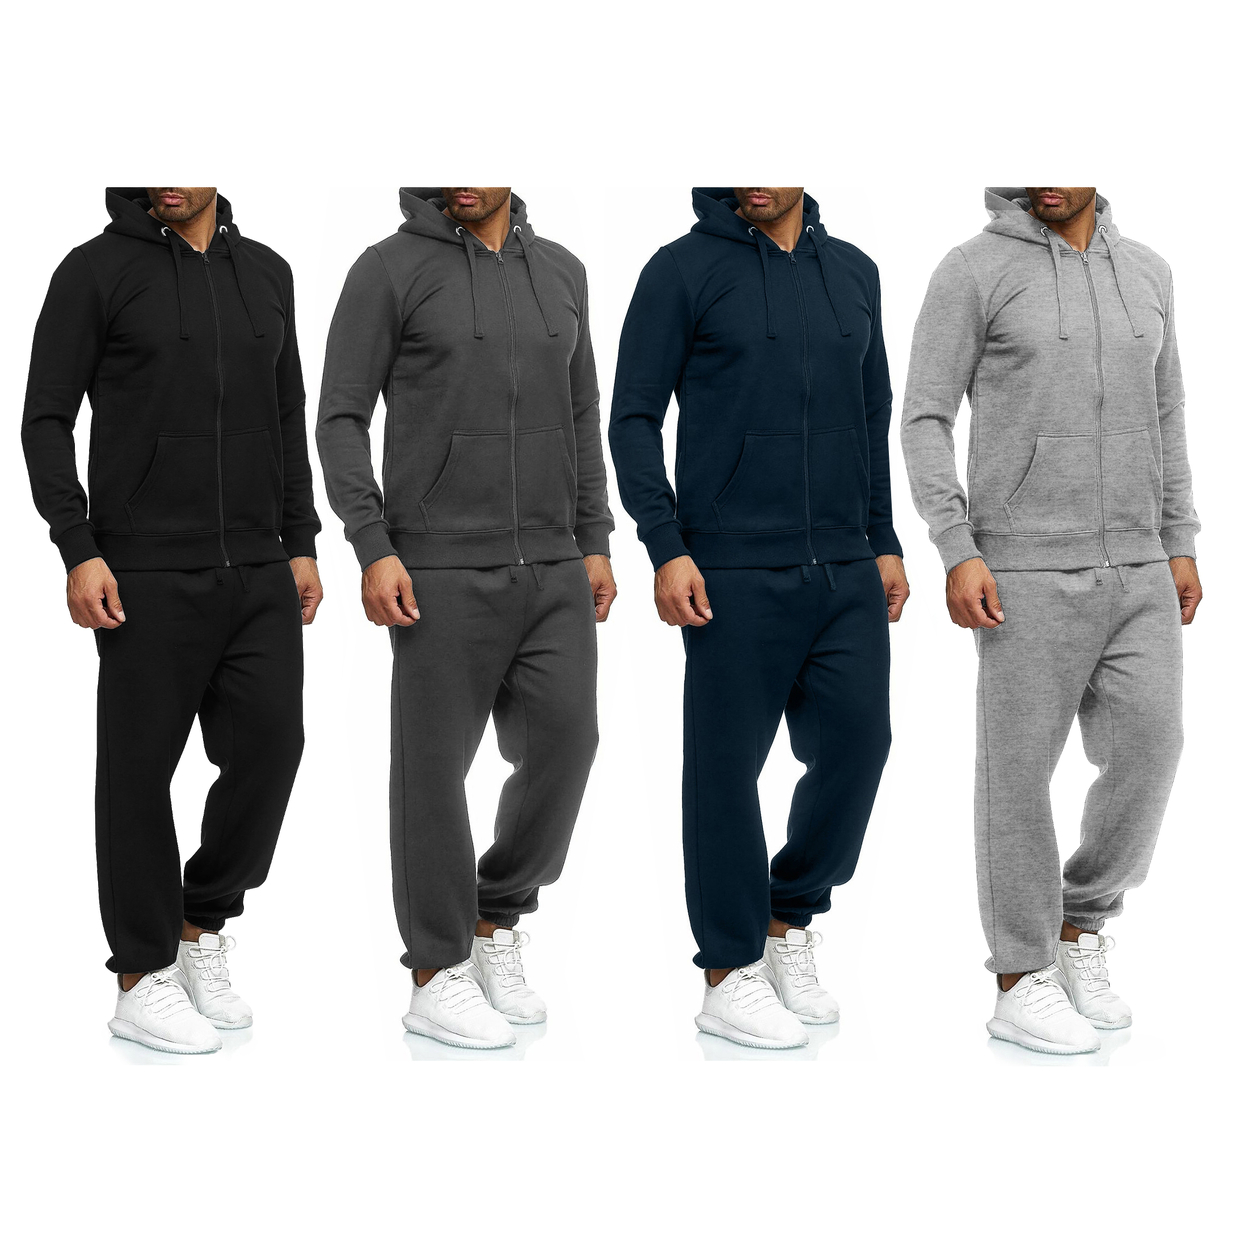 2/4-Piece: Men's Winter Warm Cozy Athletic Multi-Pockets BIG & TALL Sweatsuit Set - Grey, 1, Xx-large